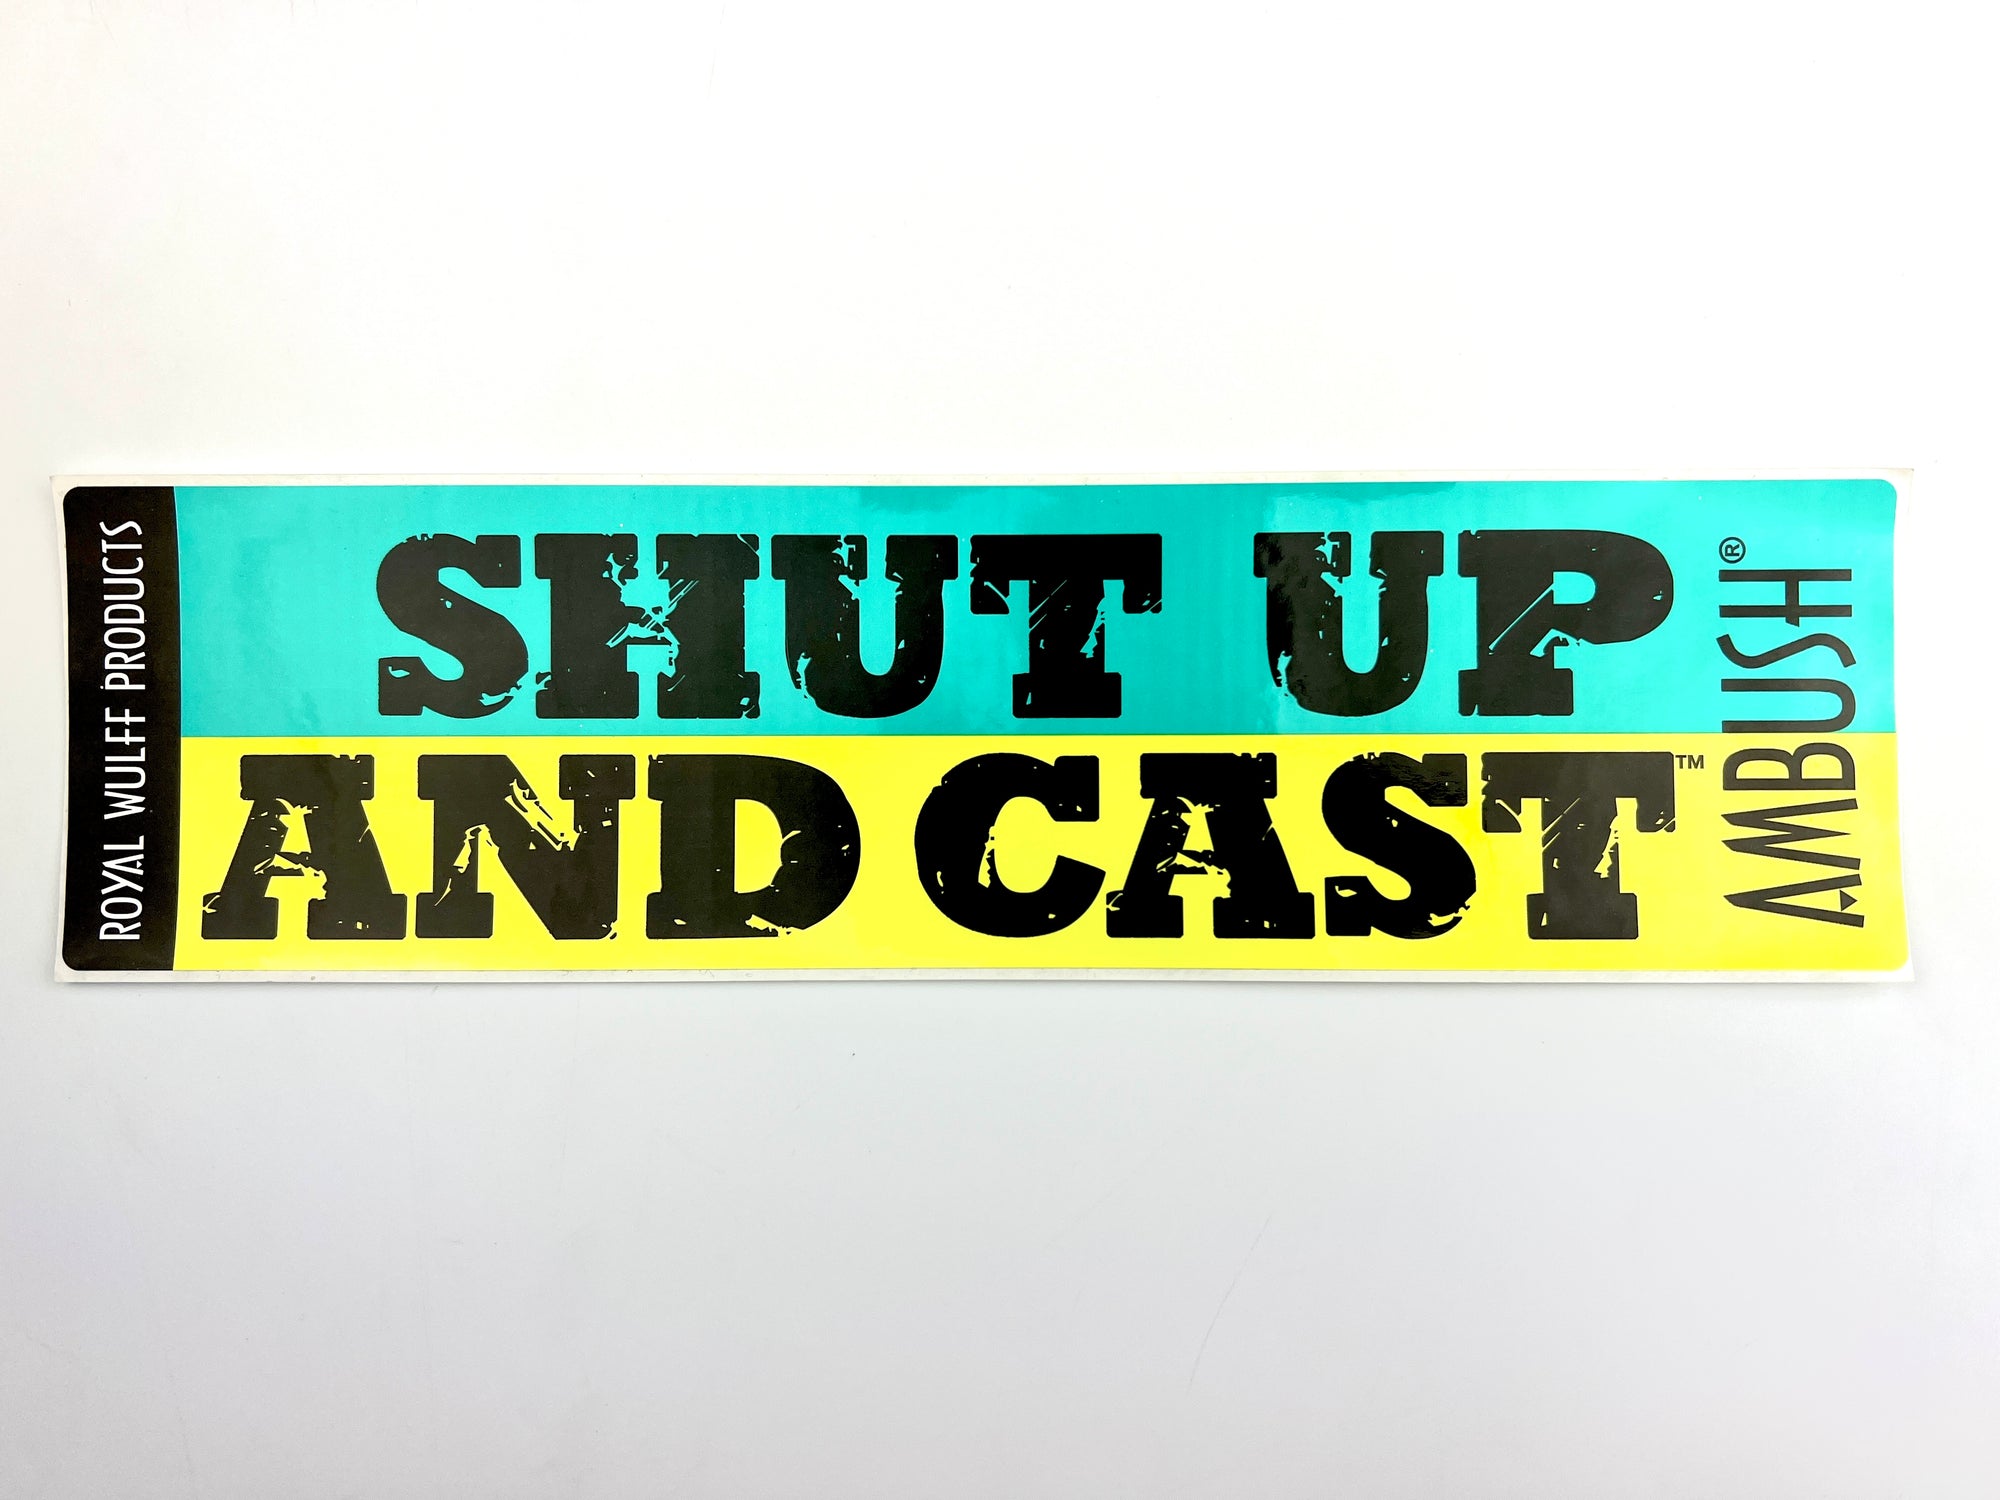 Shut Up And Cast Bumper Sticker